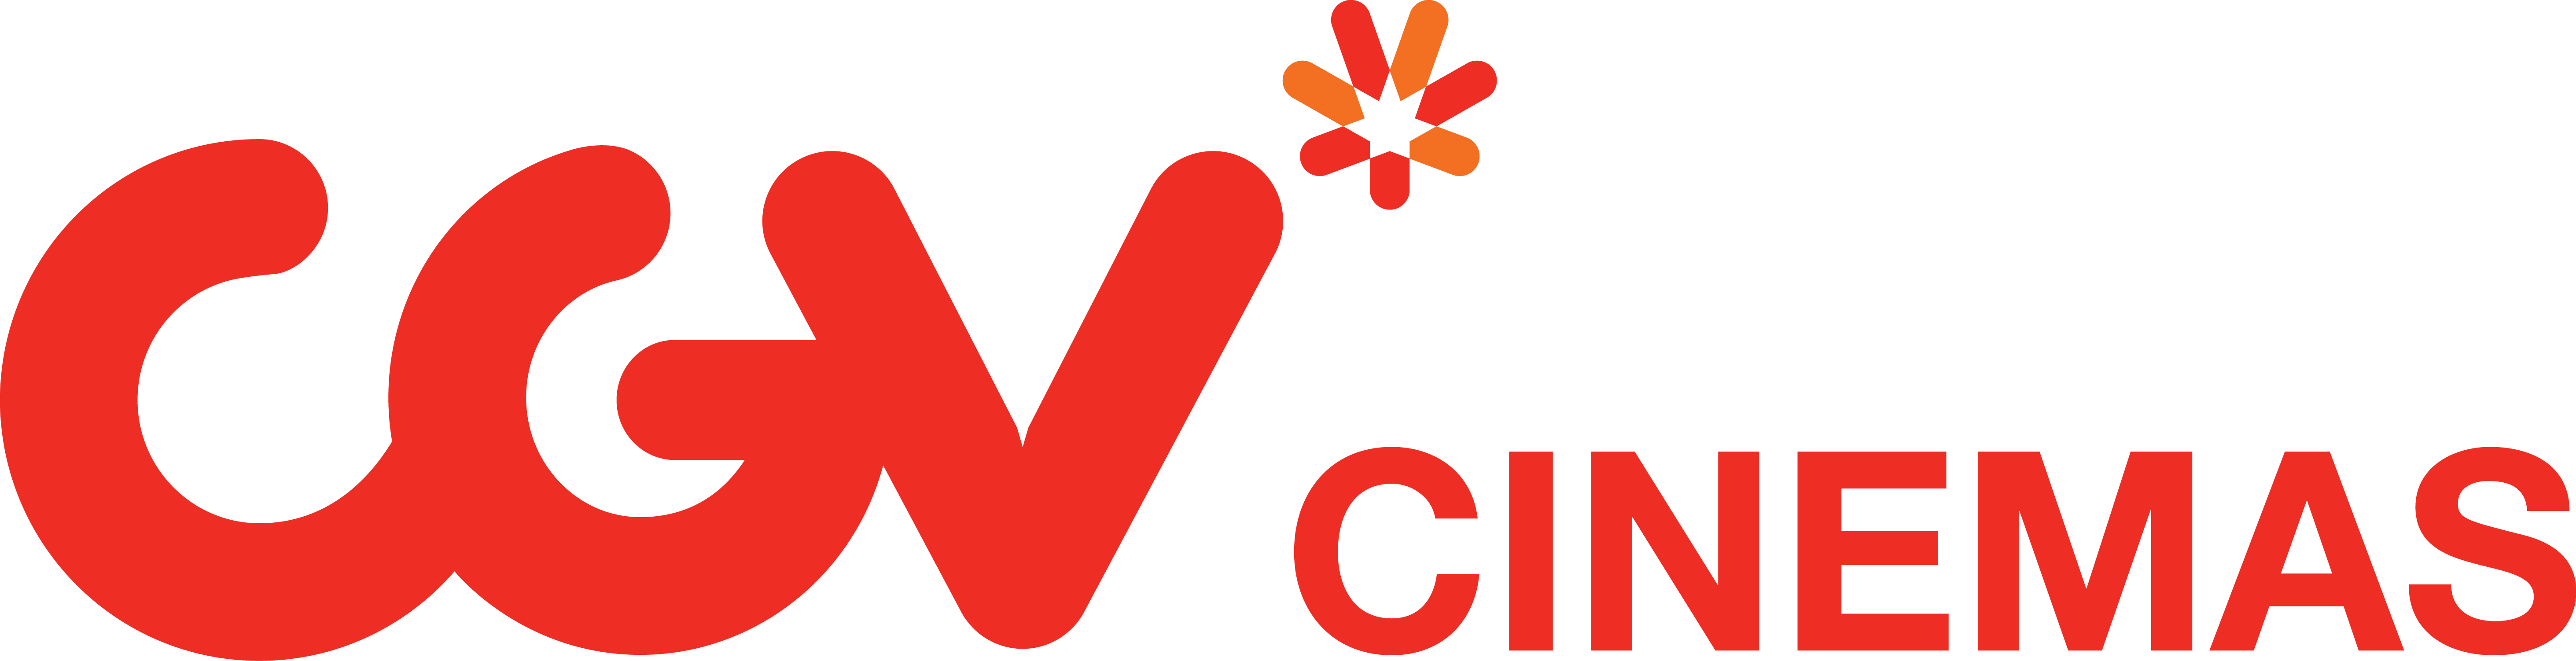 Logo CGV Cinemas